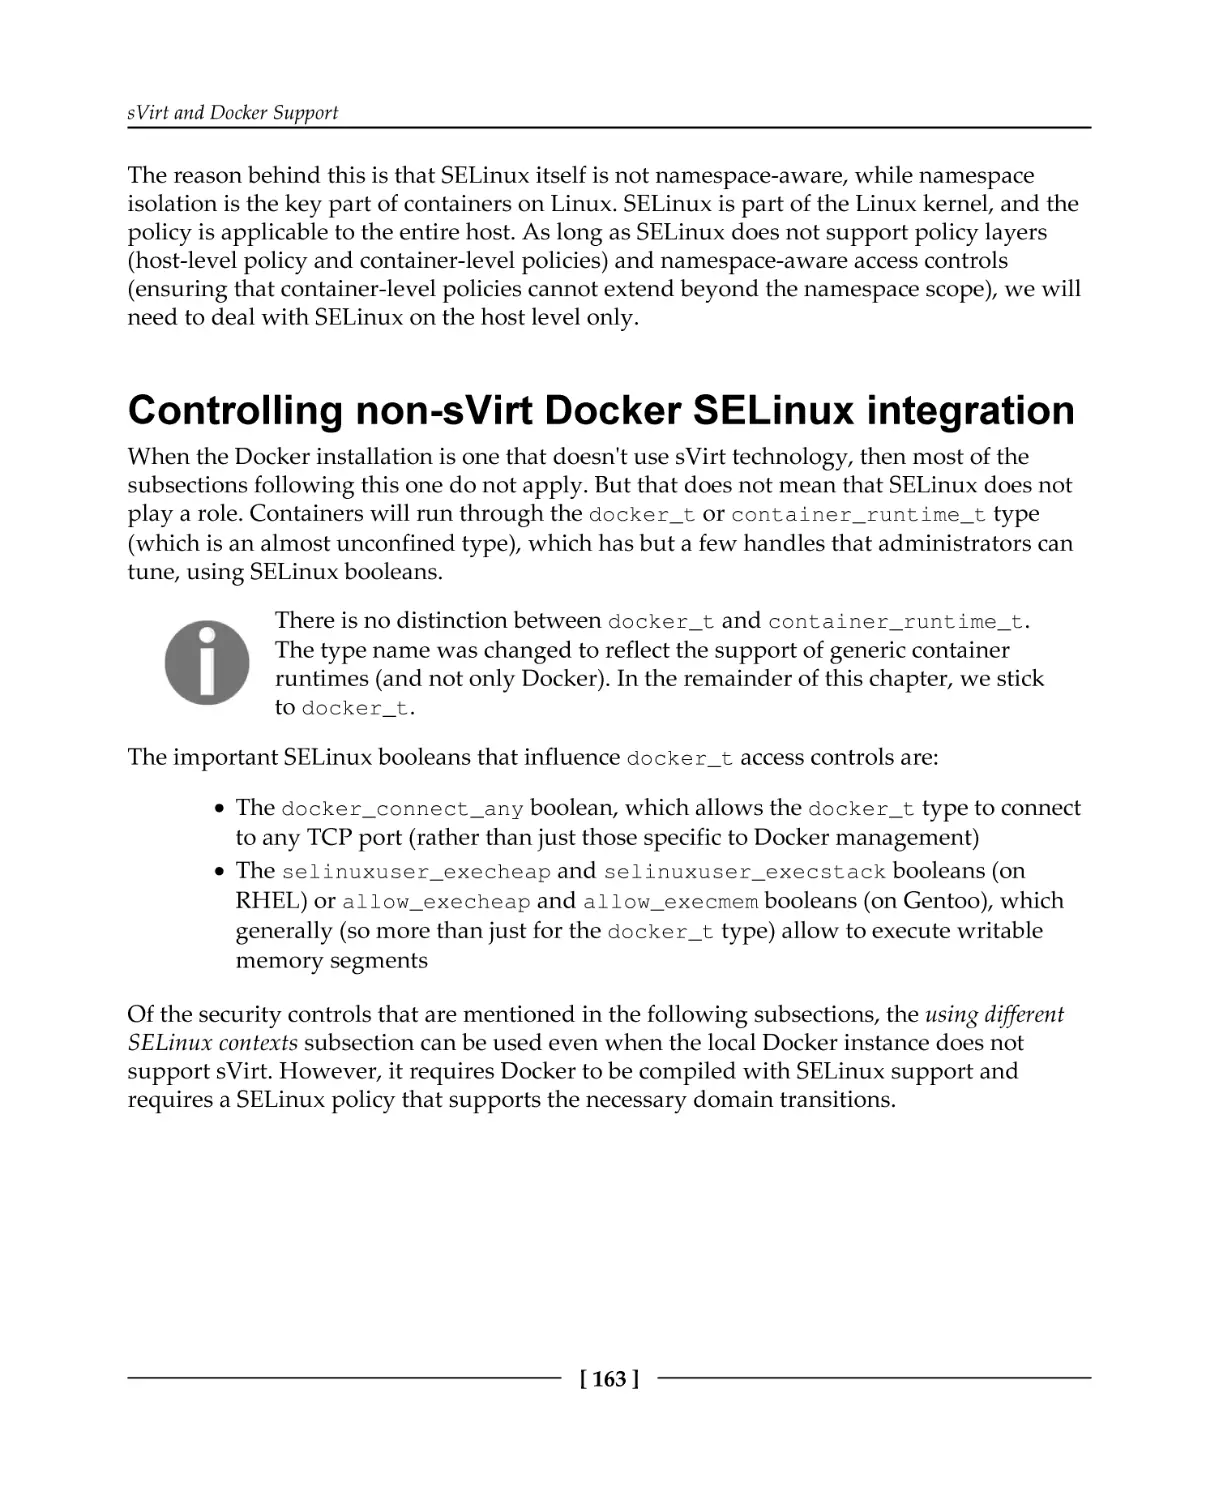 Controlling non-sVirt Docker SELinux integration